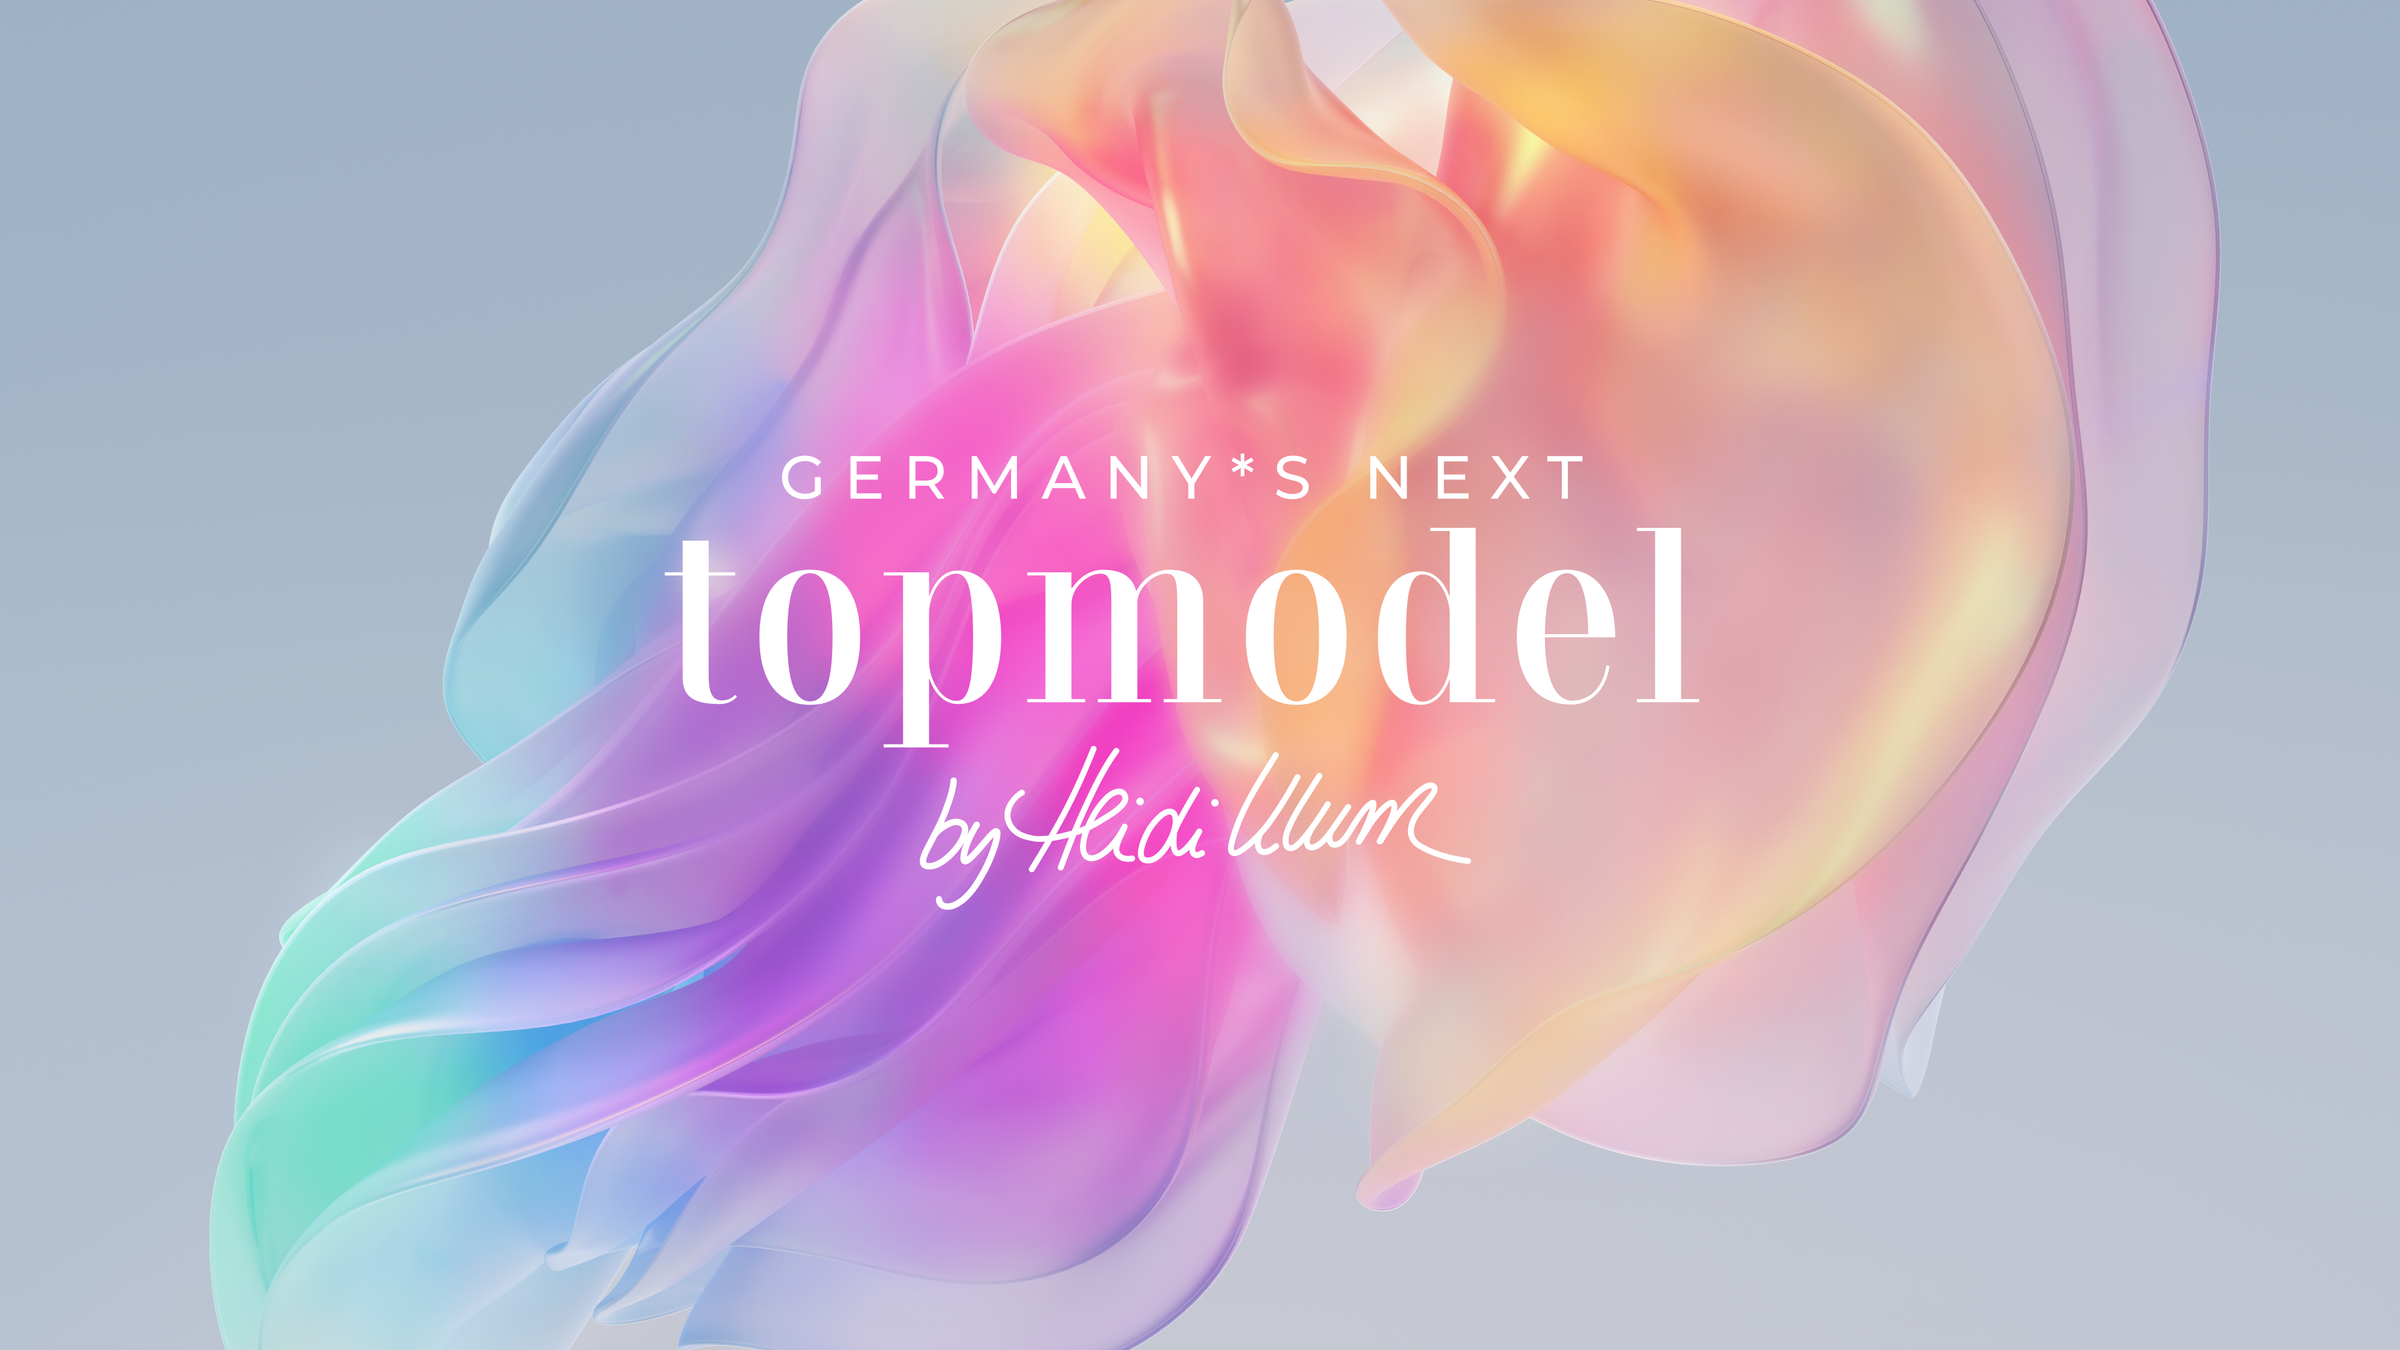 "Germany's Next Topmodel" geht 2023 mit Heidi Klum in die 18. Staffel.